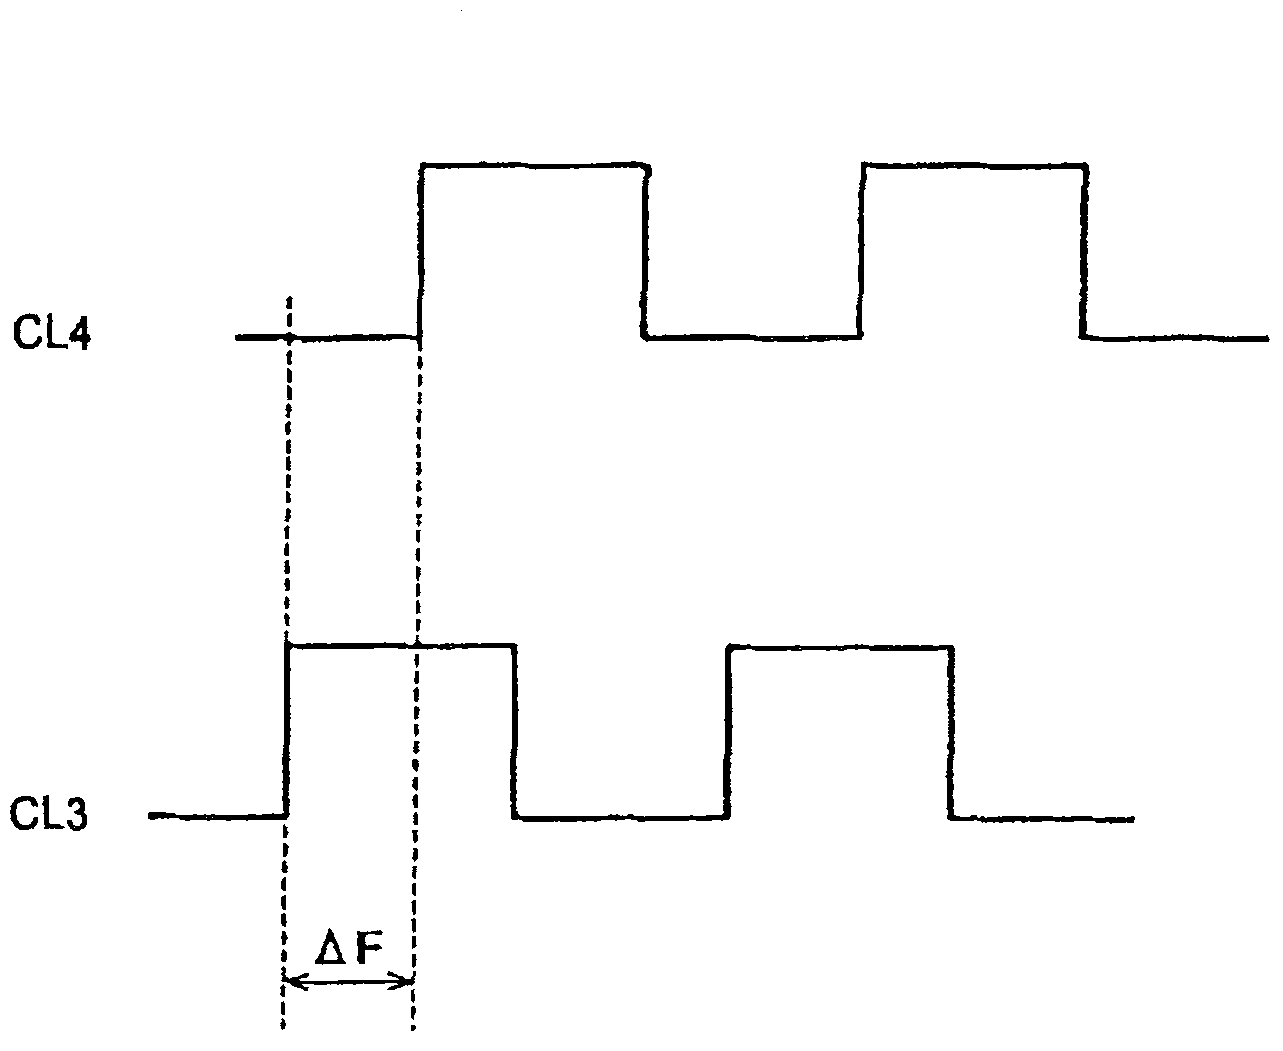 Clock signal output apparatus and control method of same, and electric apparatus and control method of same